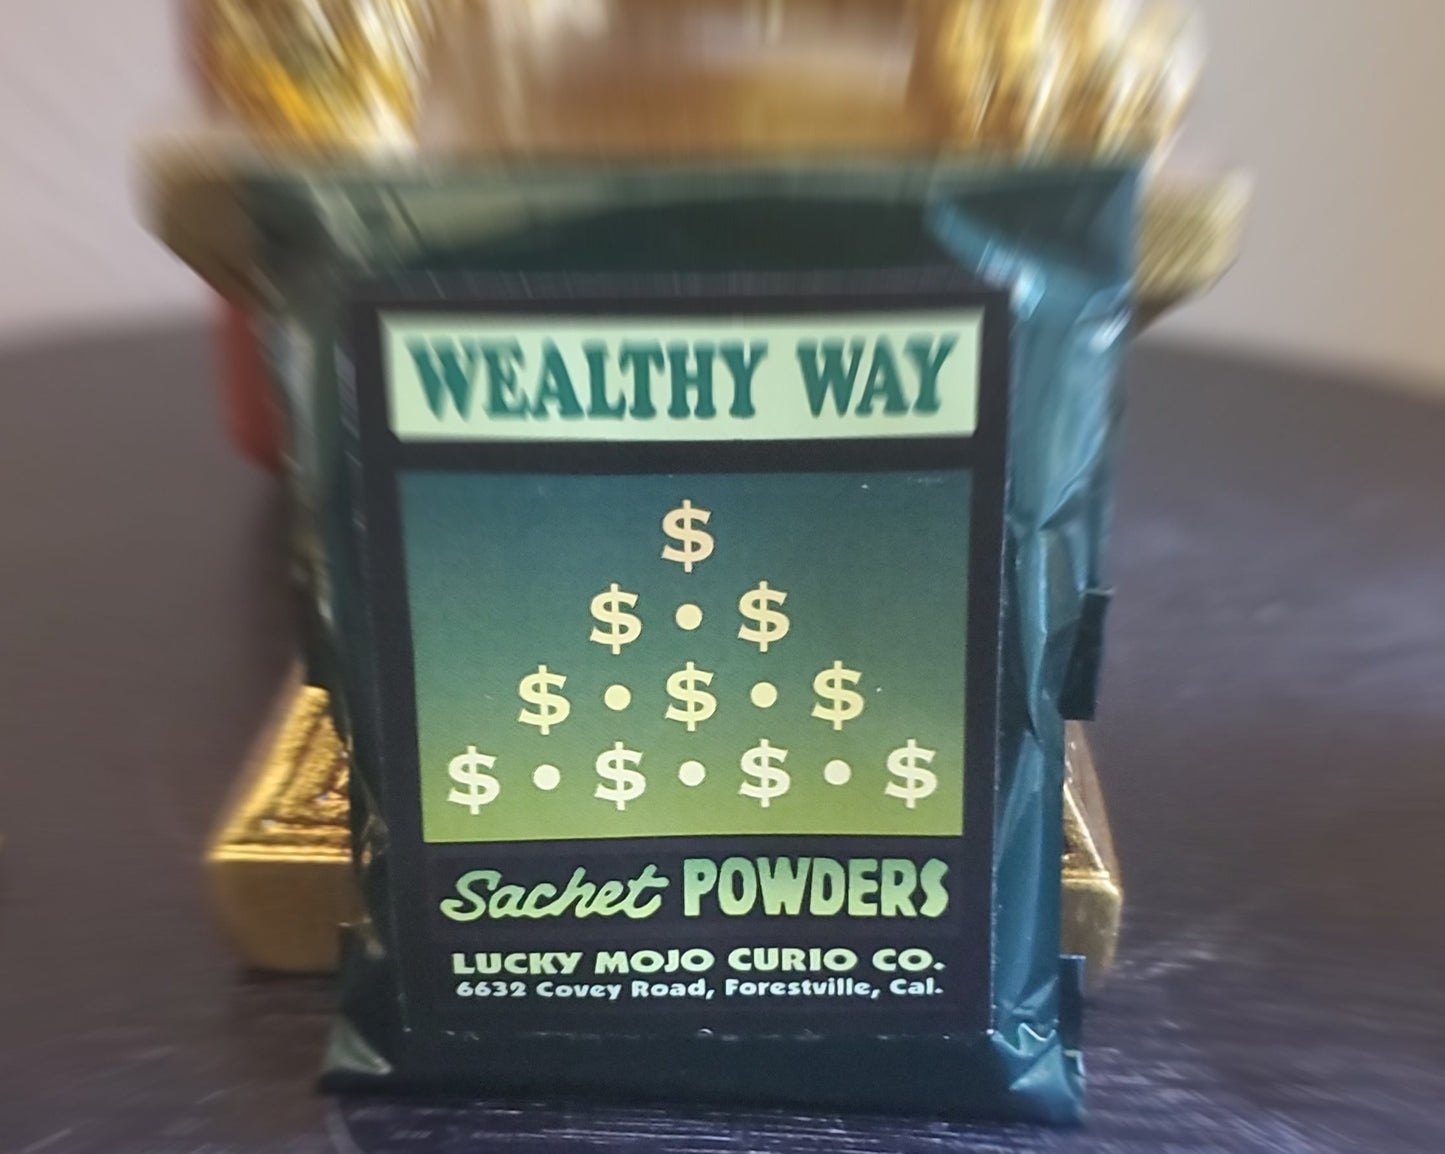 LuckyMojoCurioCo "Wealthy Way" Satchet Powder #Great Deal #LuckyMojoCurioCo #LuckyMojo #IncensePowders #Hoodoo #MoneyMagick #AttractionMagick